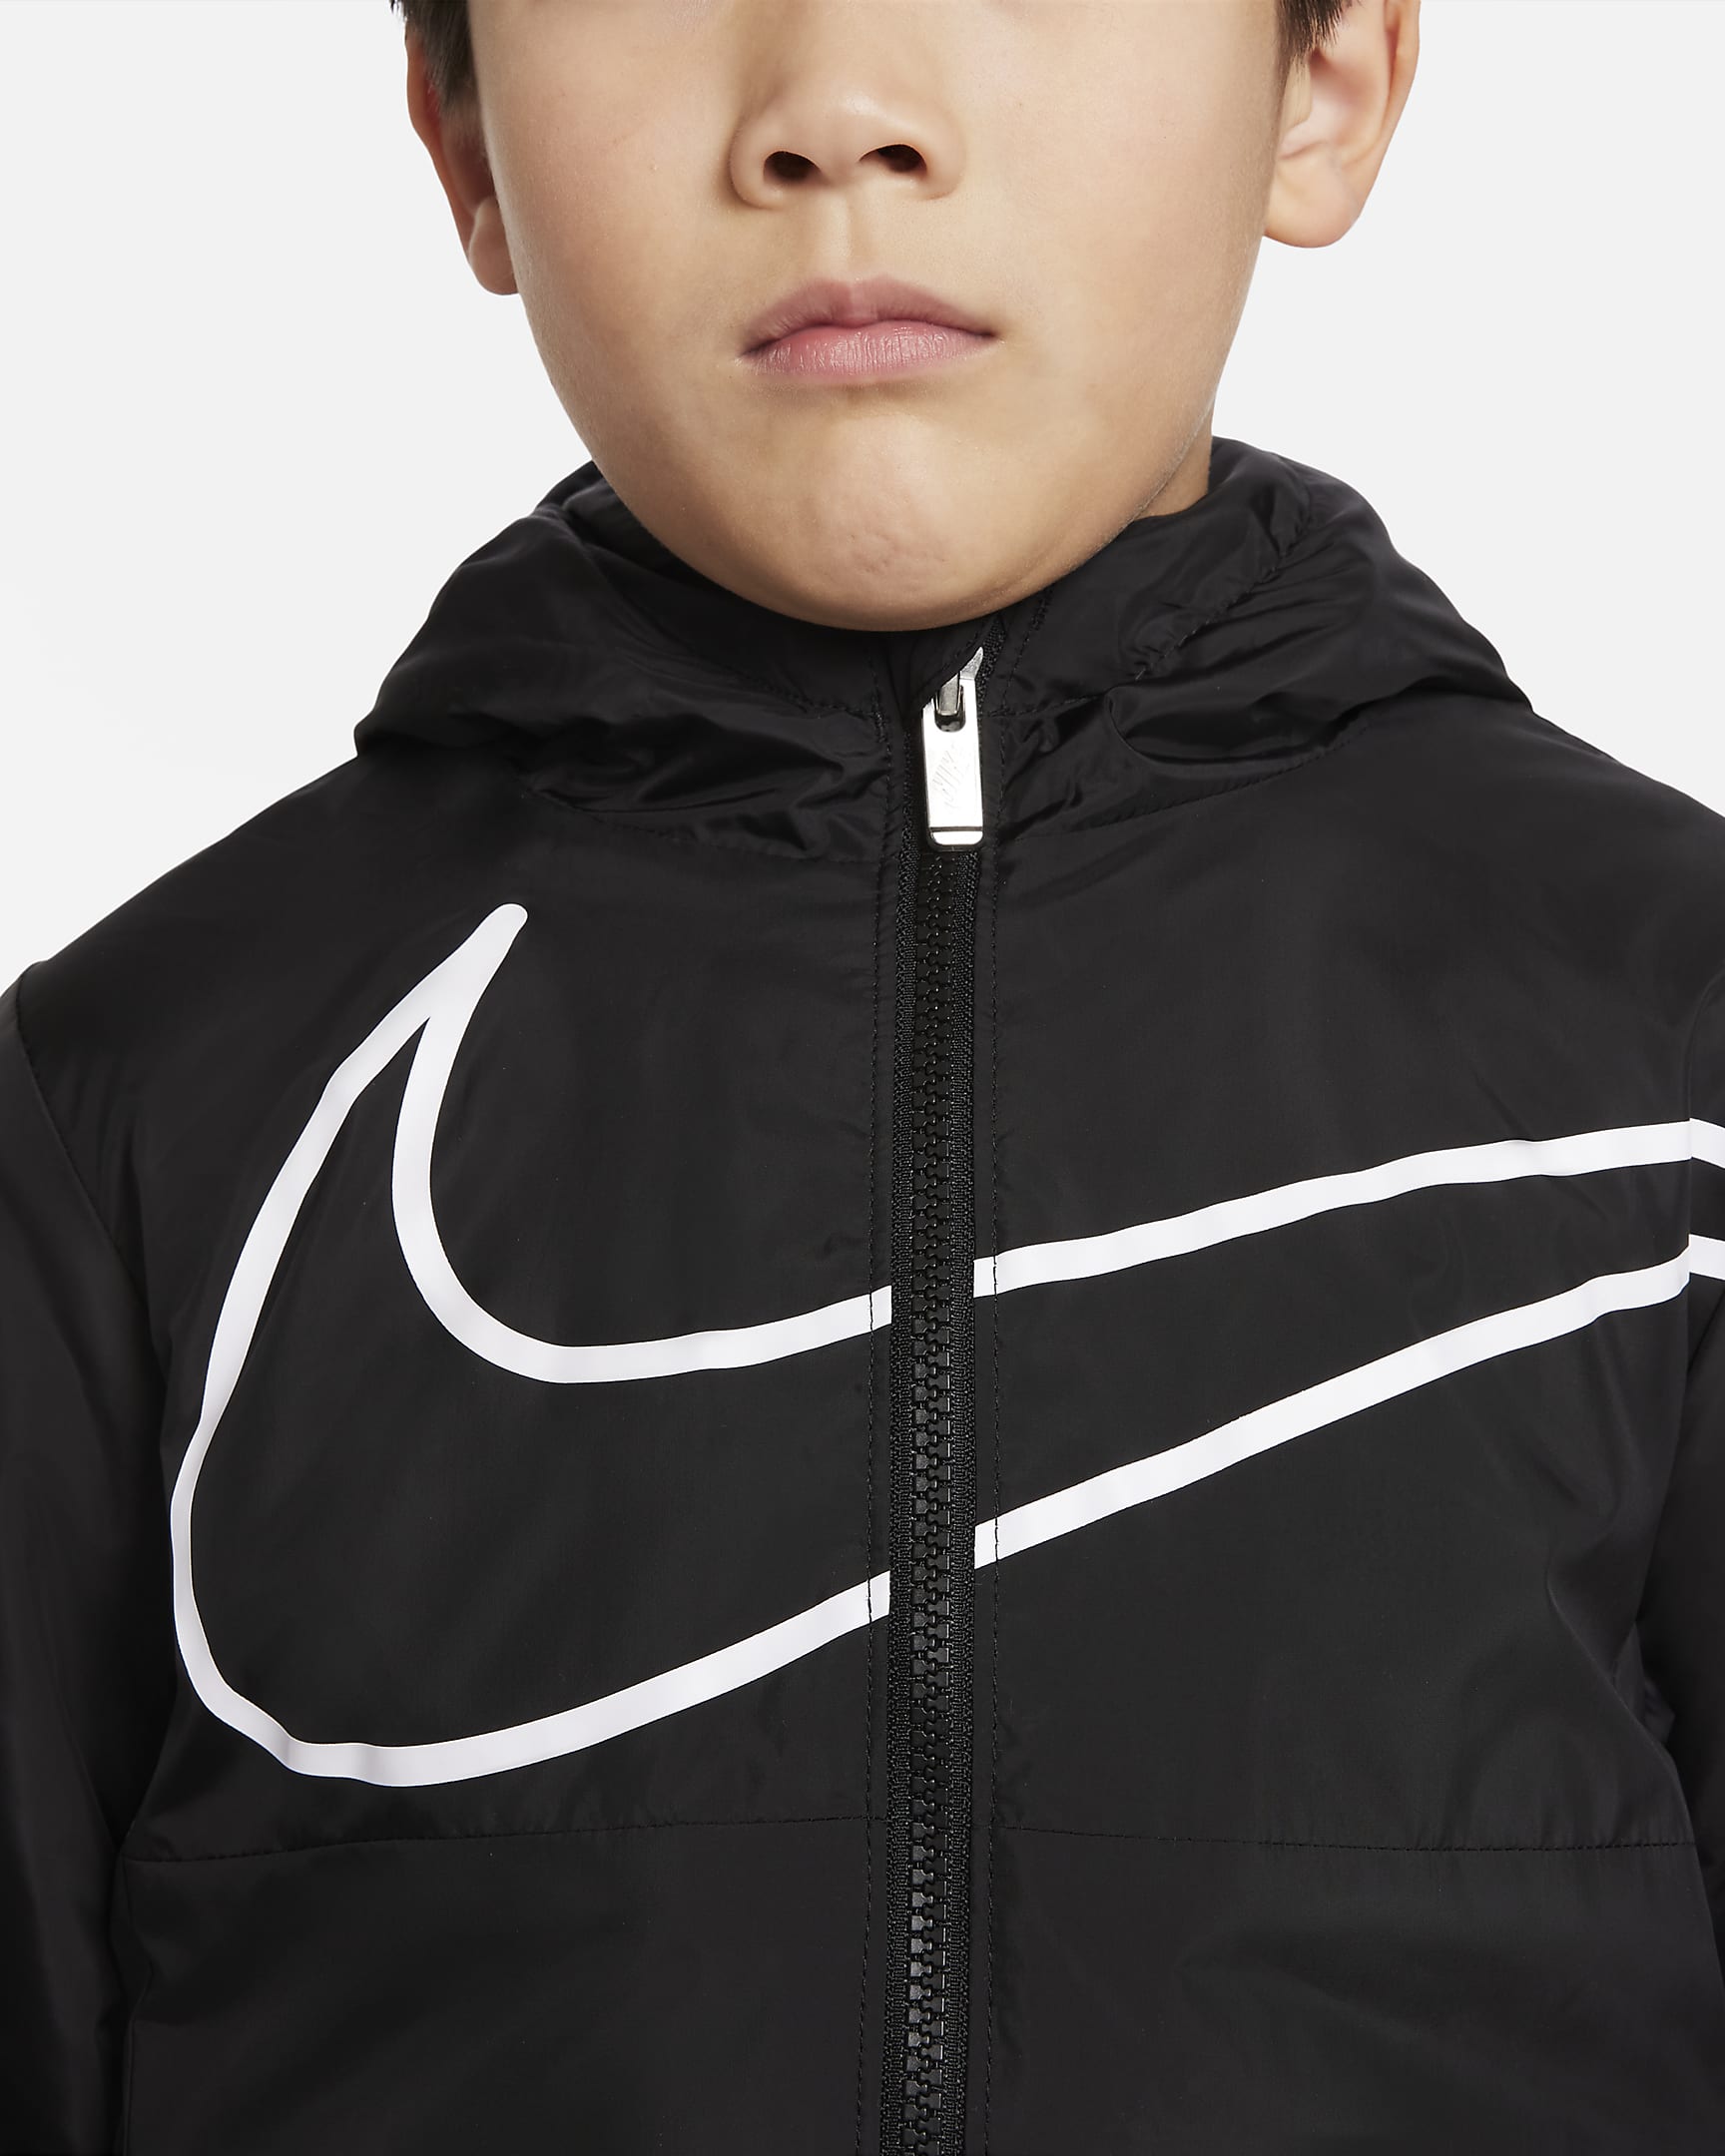 Nike Little Kids' Full-Zip Jacket. Nike.com